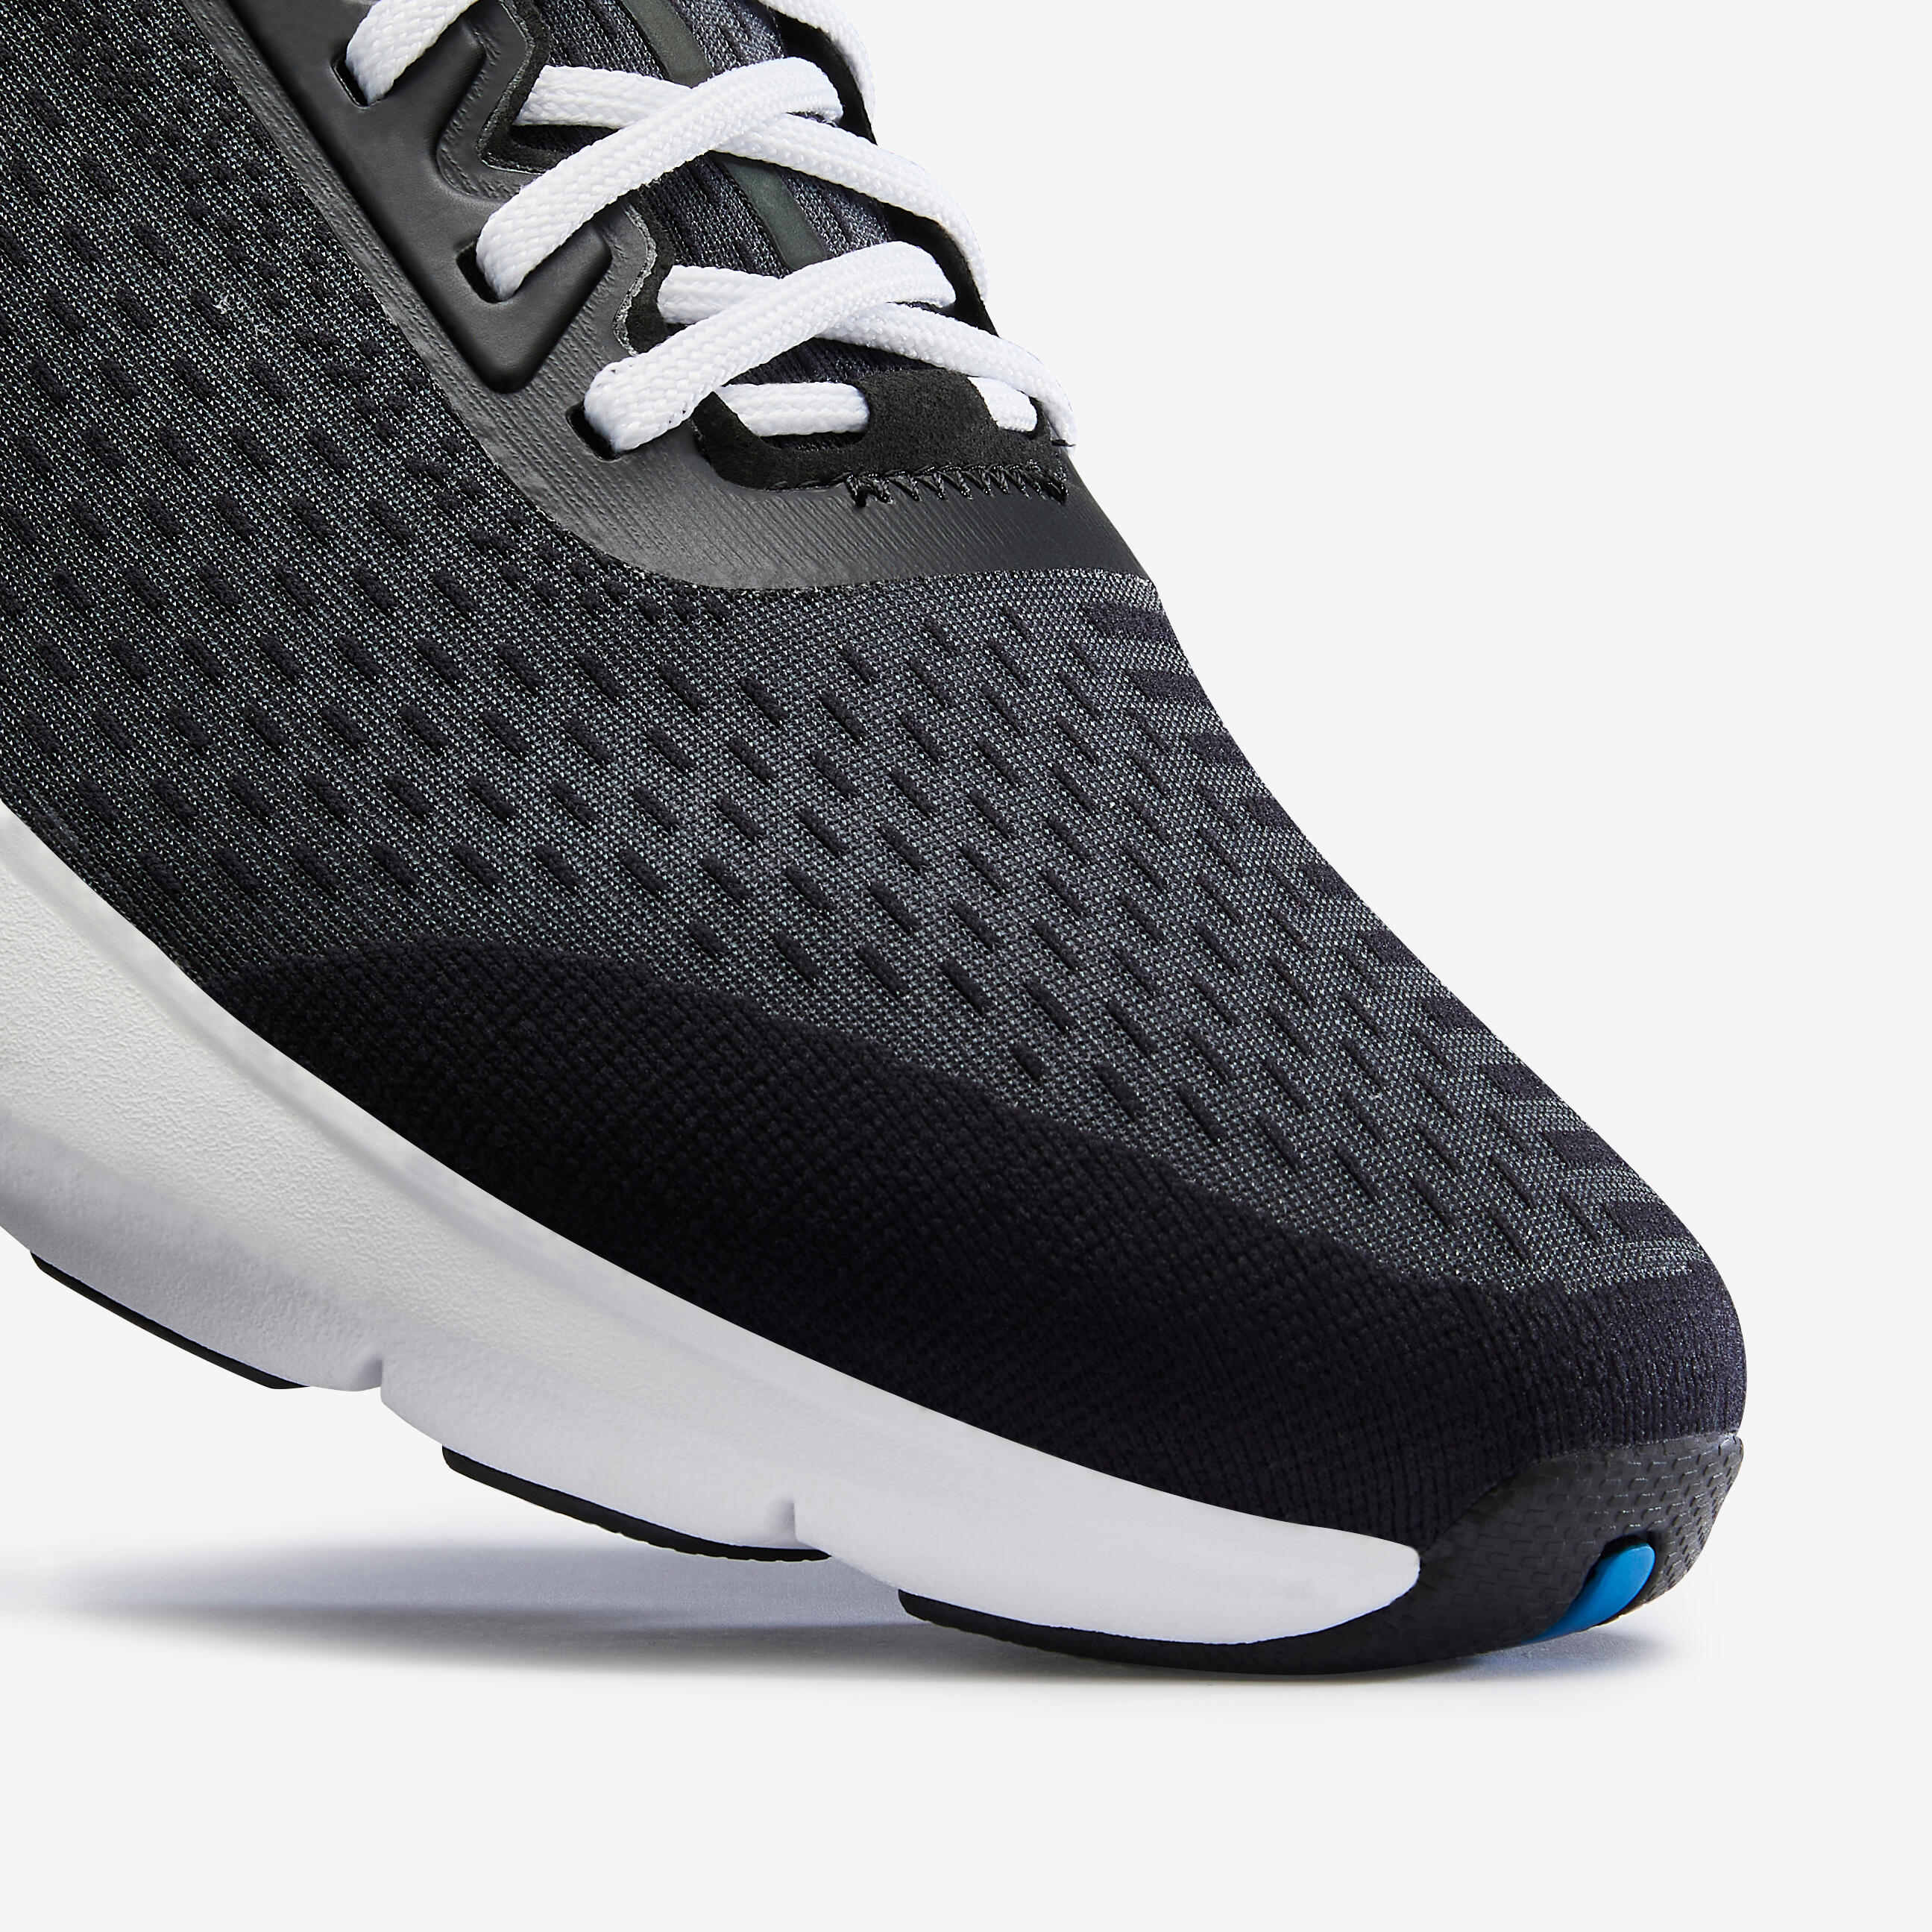 Men's Running Shoes - Run Active Black/Grey - black - Kalenji